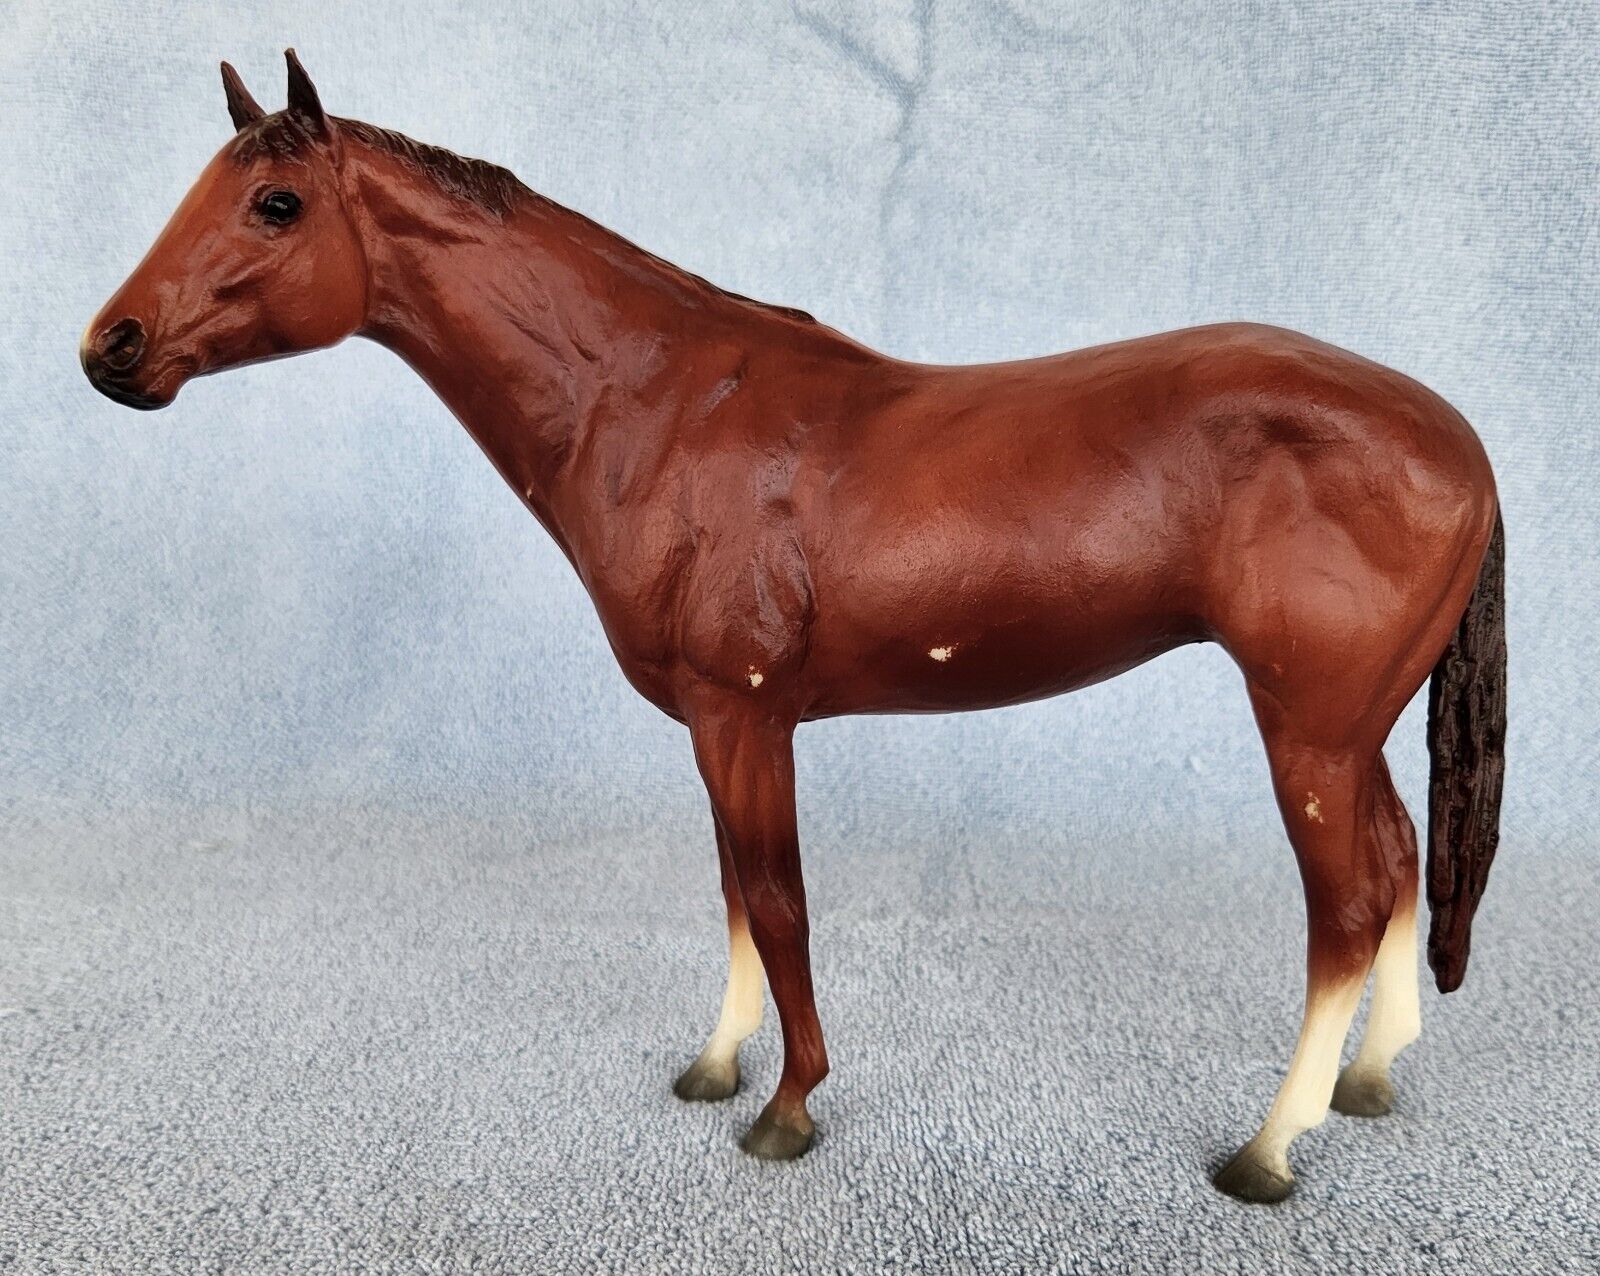 Breyer 1987-1995 Artist Series Secretariat, Famous Race Horse. #435.